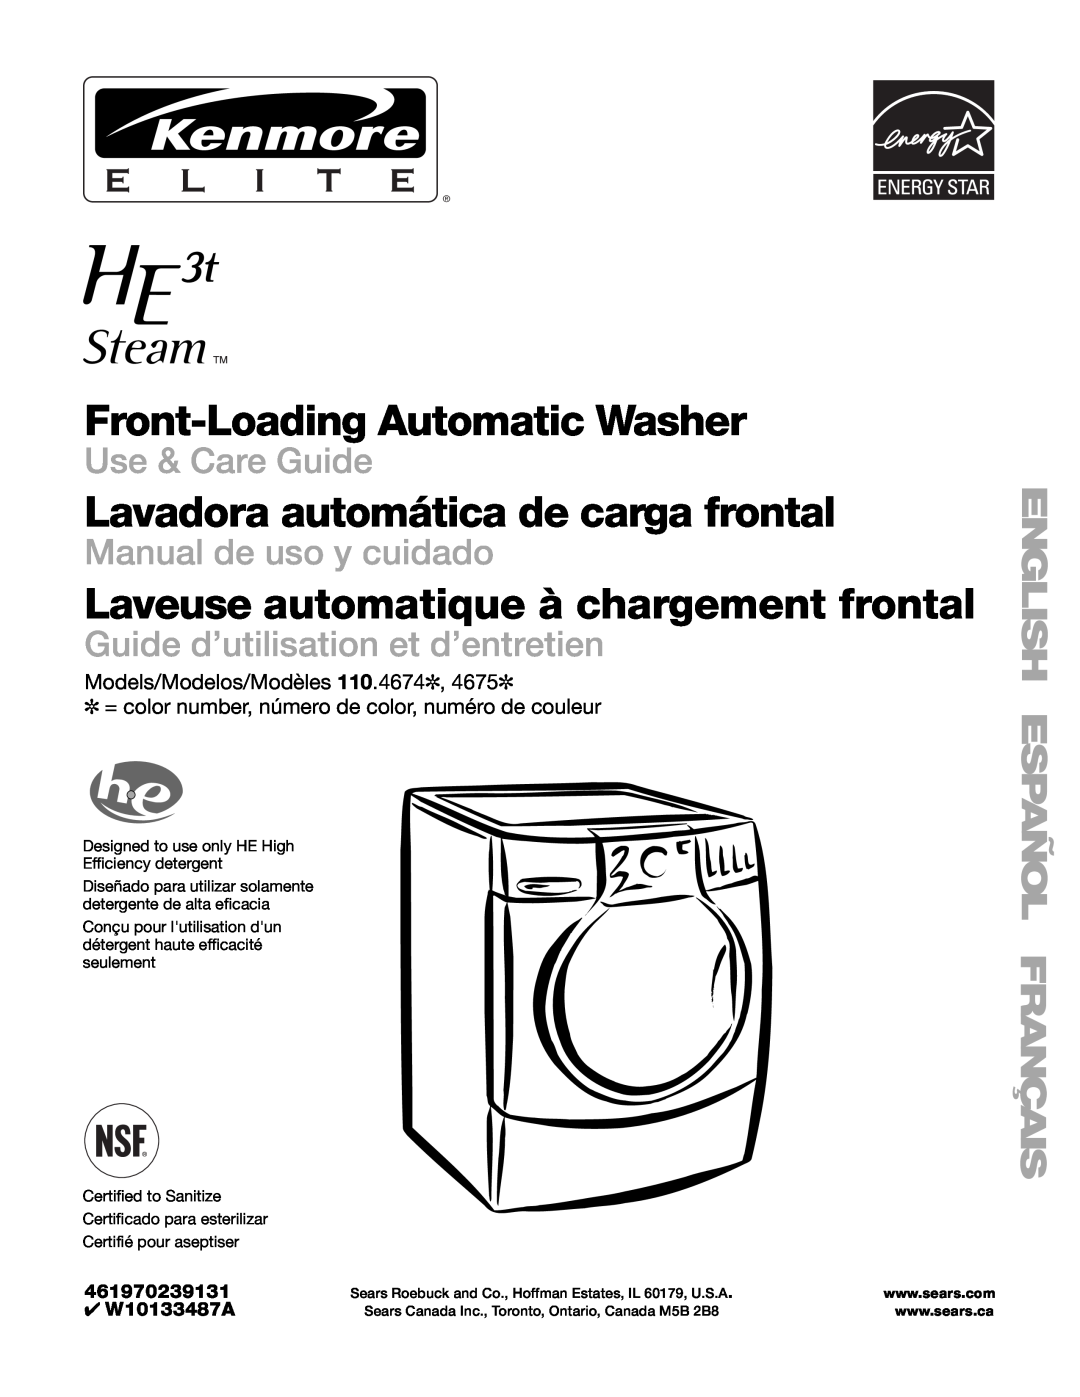 Kenmore W10133487A manual 461970239131, Front-Loading Automatic Washer, Lavadora automática de carga frontal 